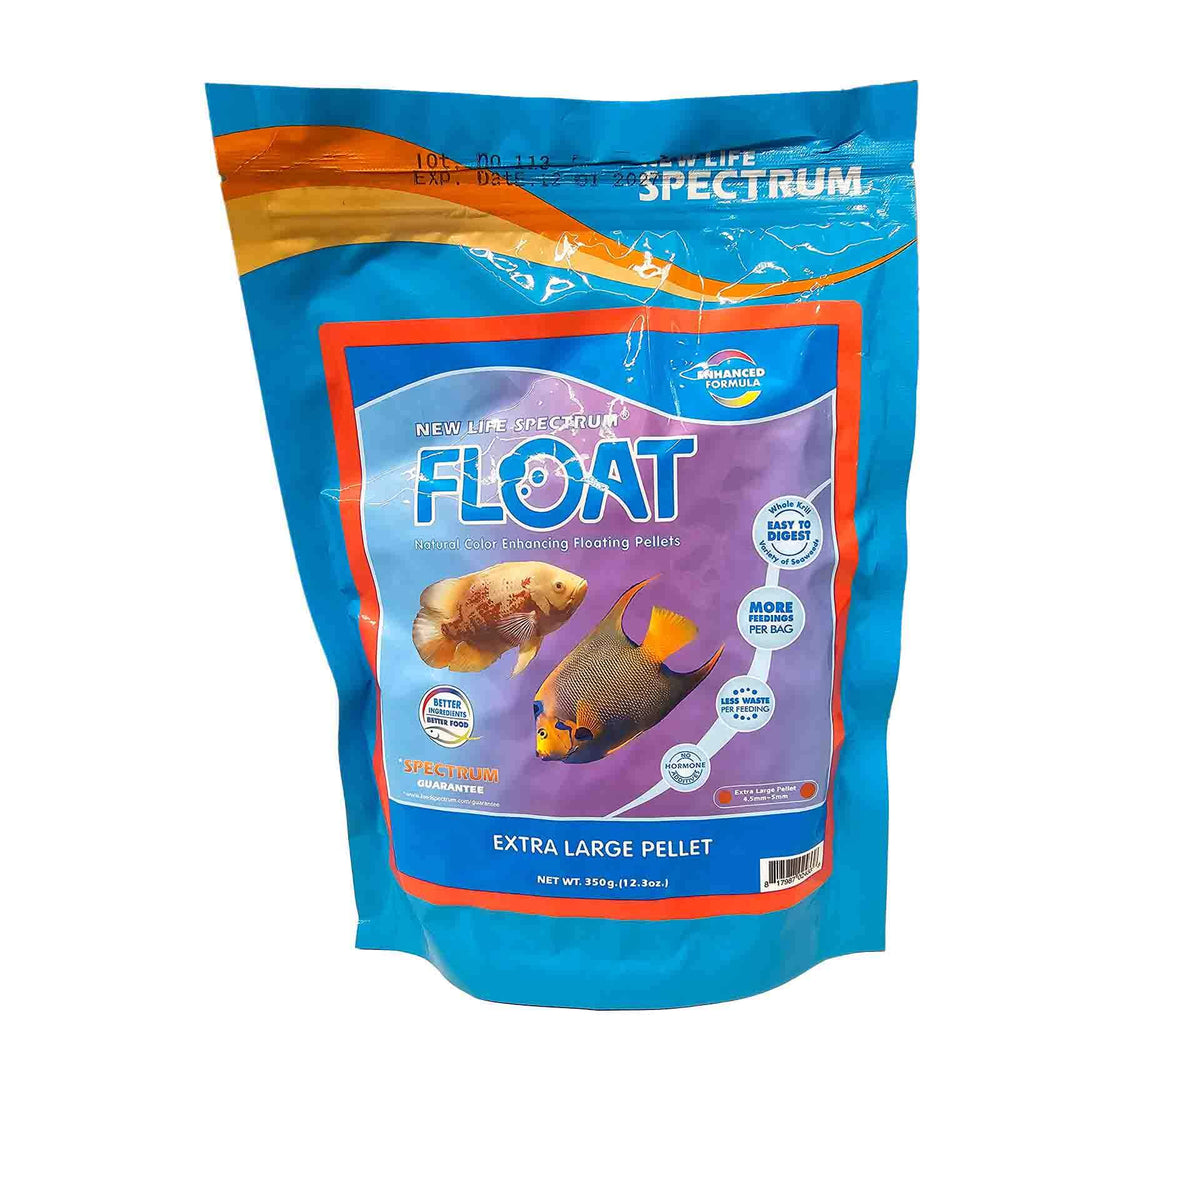 New Life Spectrum Extra Large Float Fish Diet 350g - Floating Pellet 4.5-5mm